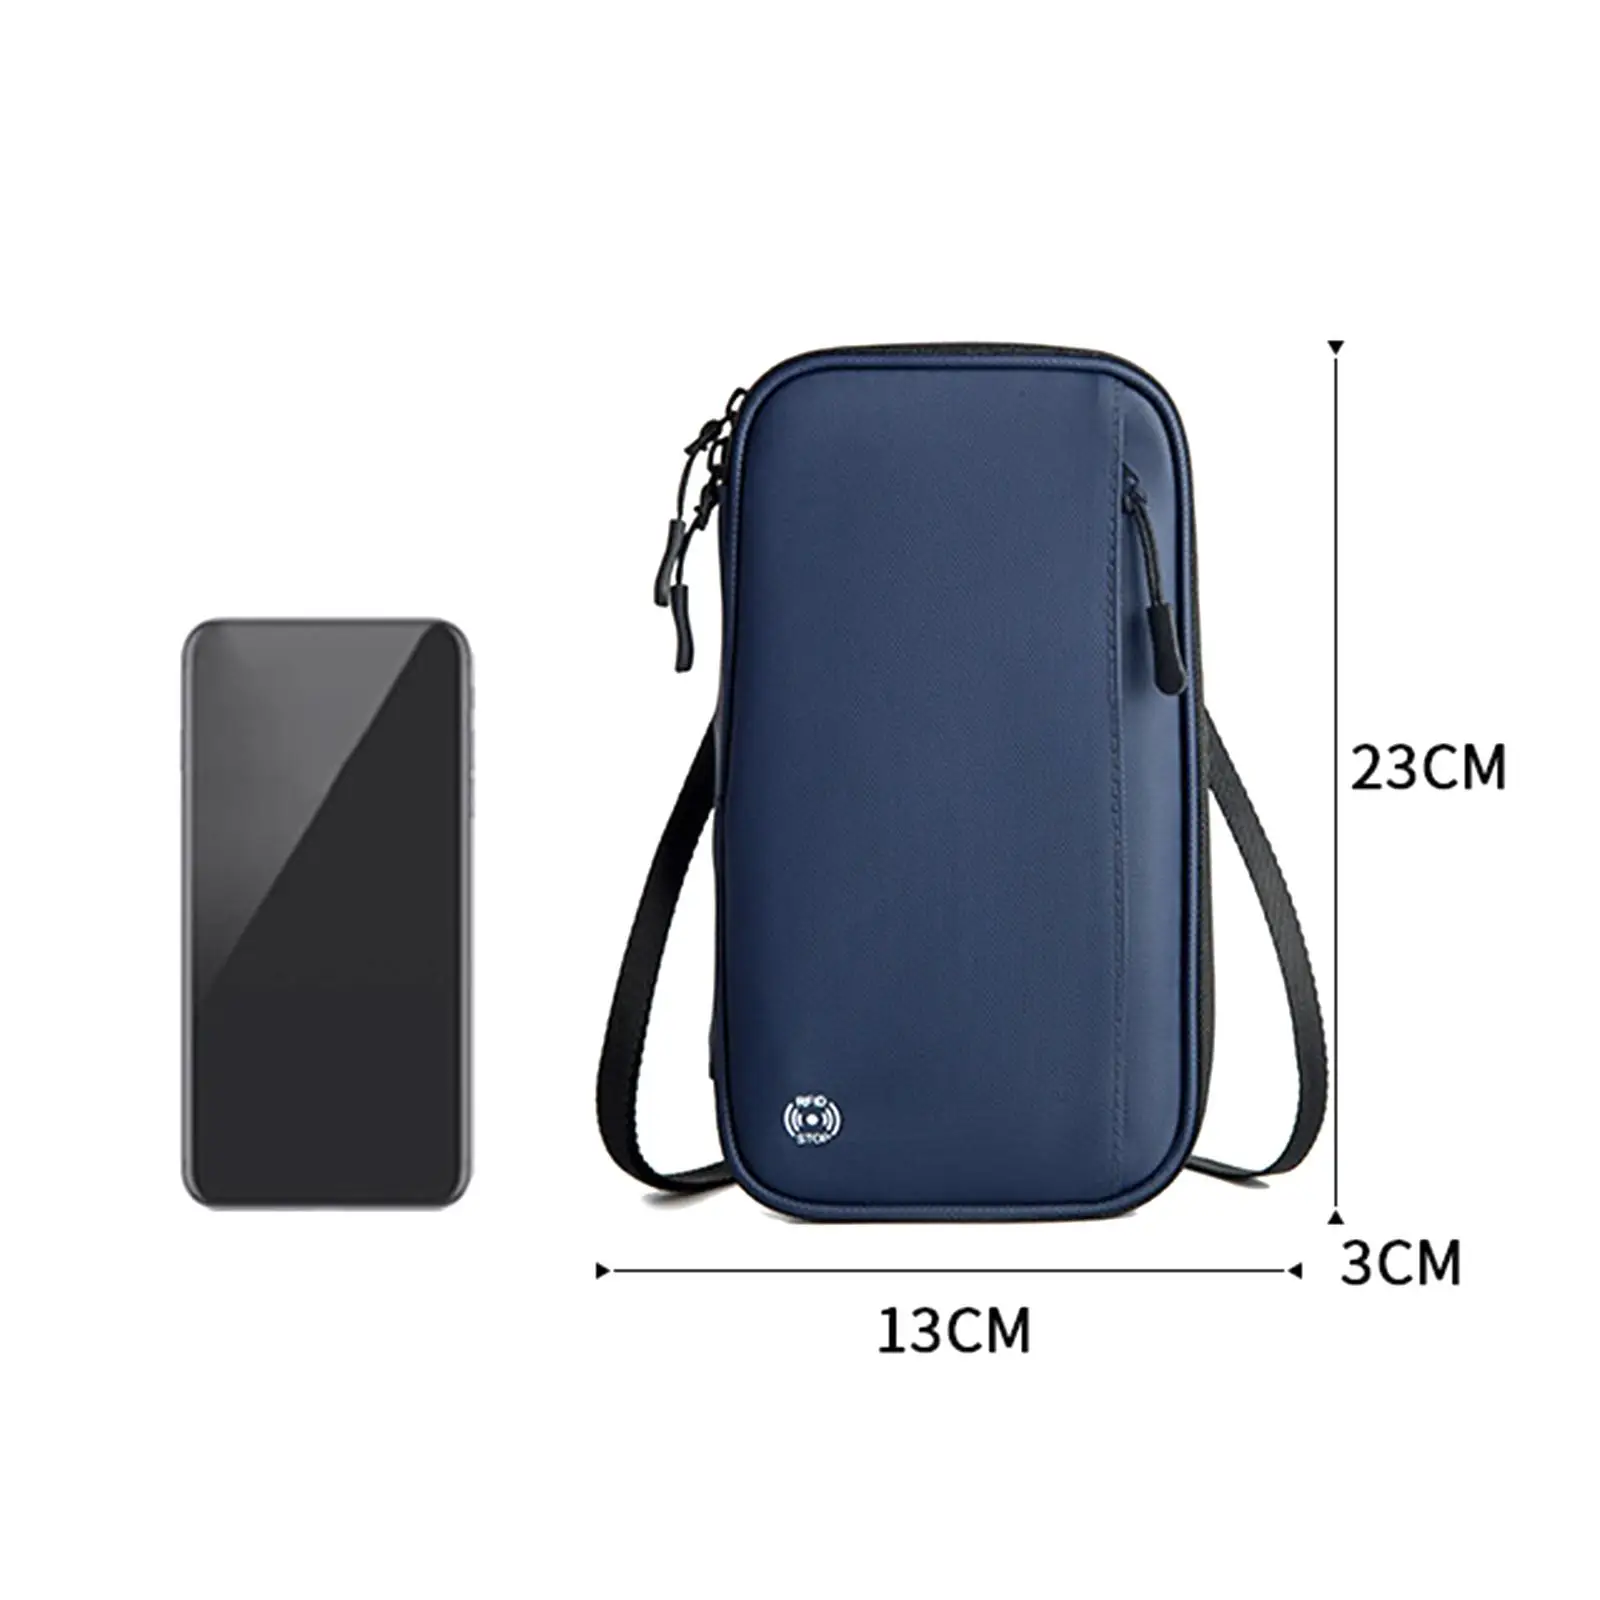 Travel Passport Wallet Wallet Case Multifunction Bag Credit Case Portable Protective Cover Passport Holder Family Case Organizer